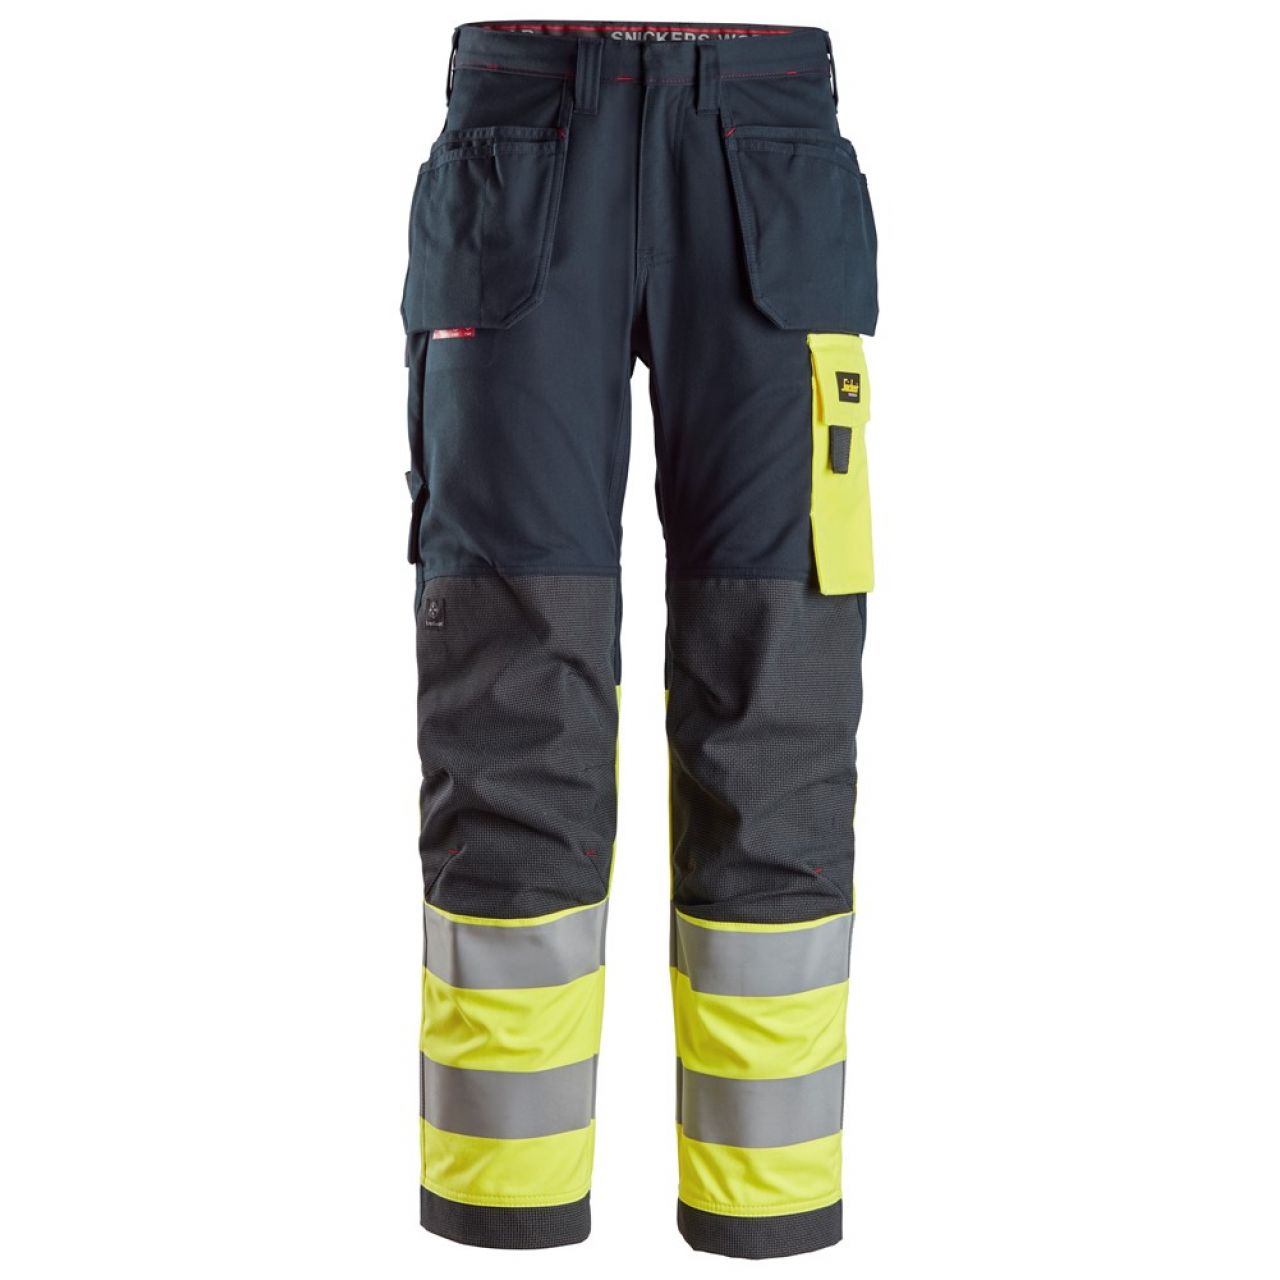 6276 Pantalones largos de trabajo de alta visibilidad clase 1 con bolsillos flotantes ProtecWork azul marino-amarillo talla 156